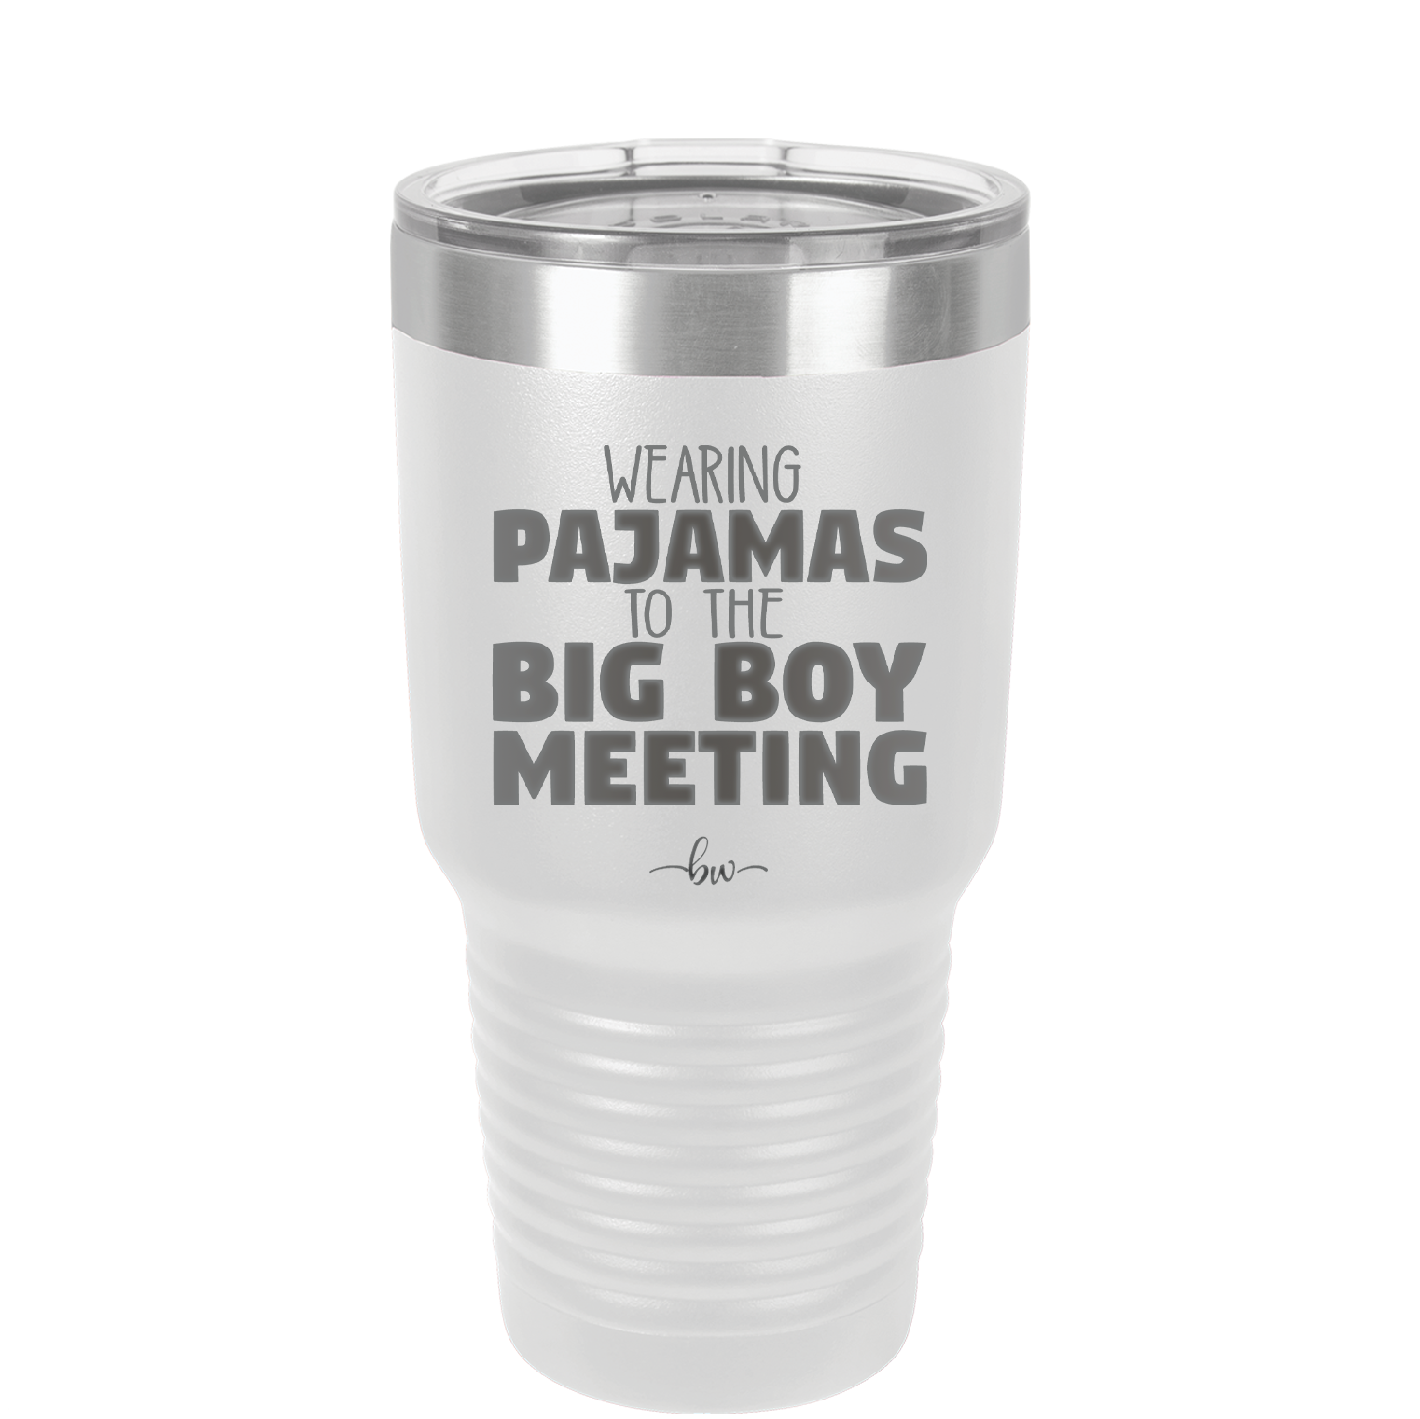 Wearing Pajamas to the Big Boy Meeting - Laser Engraved Stainless Steel Drinkware - 1852 -